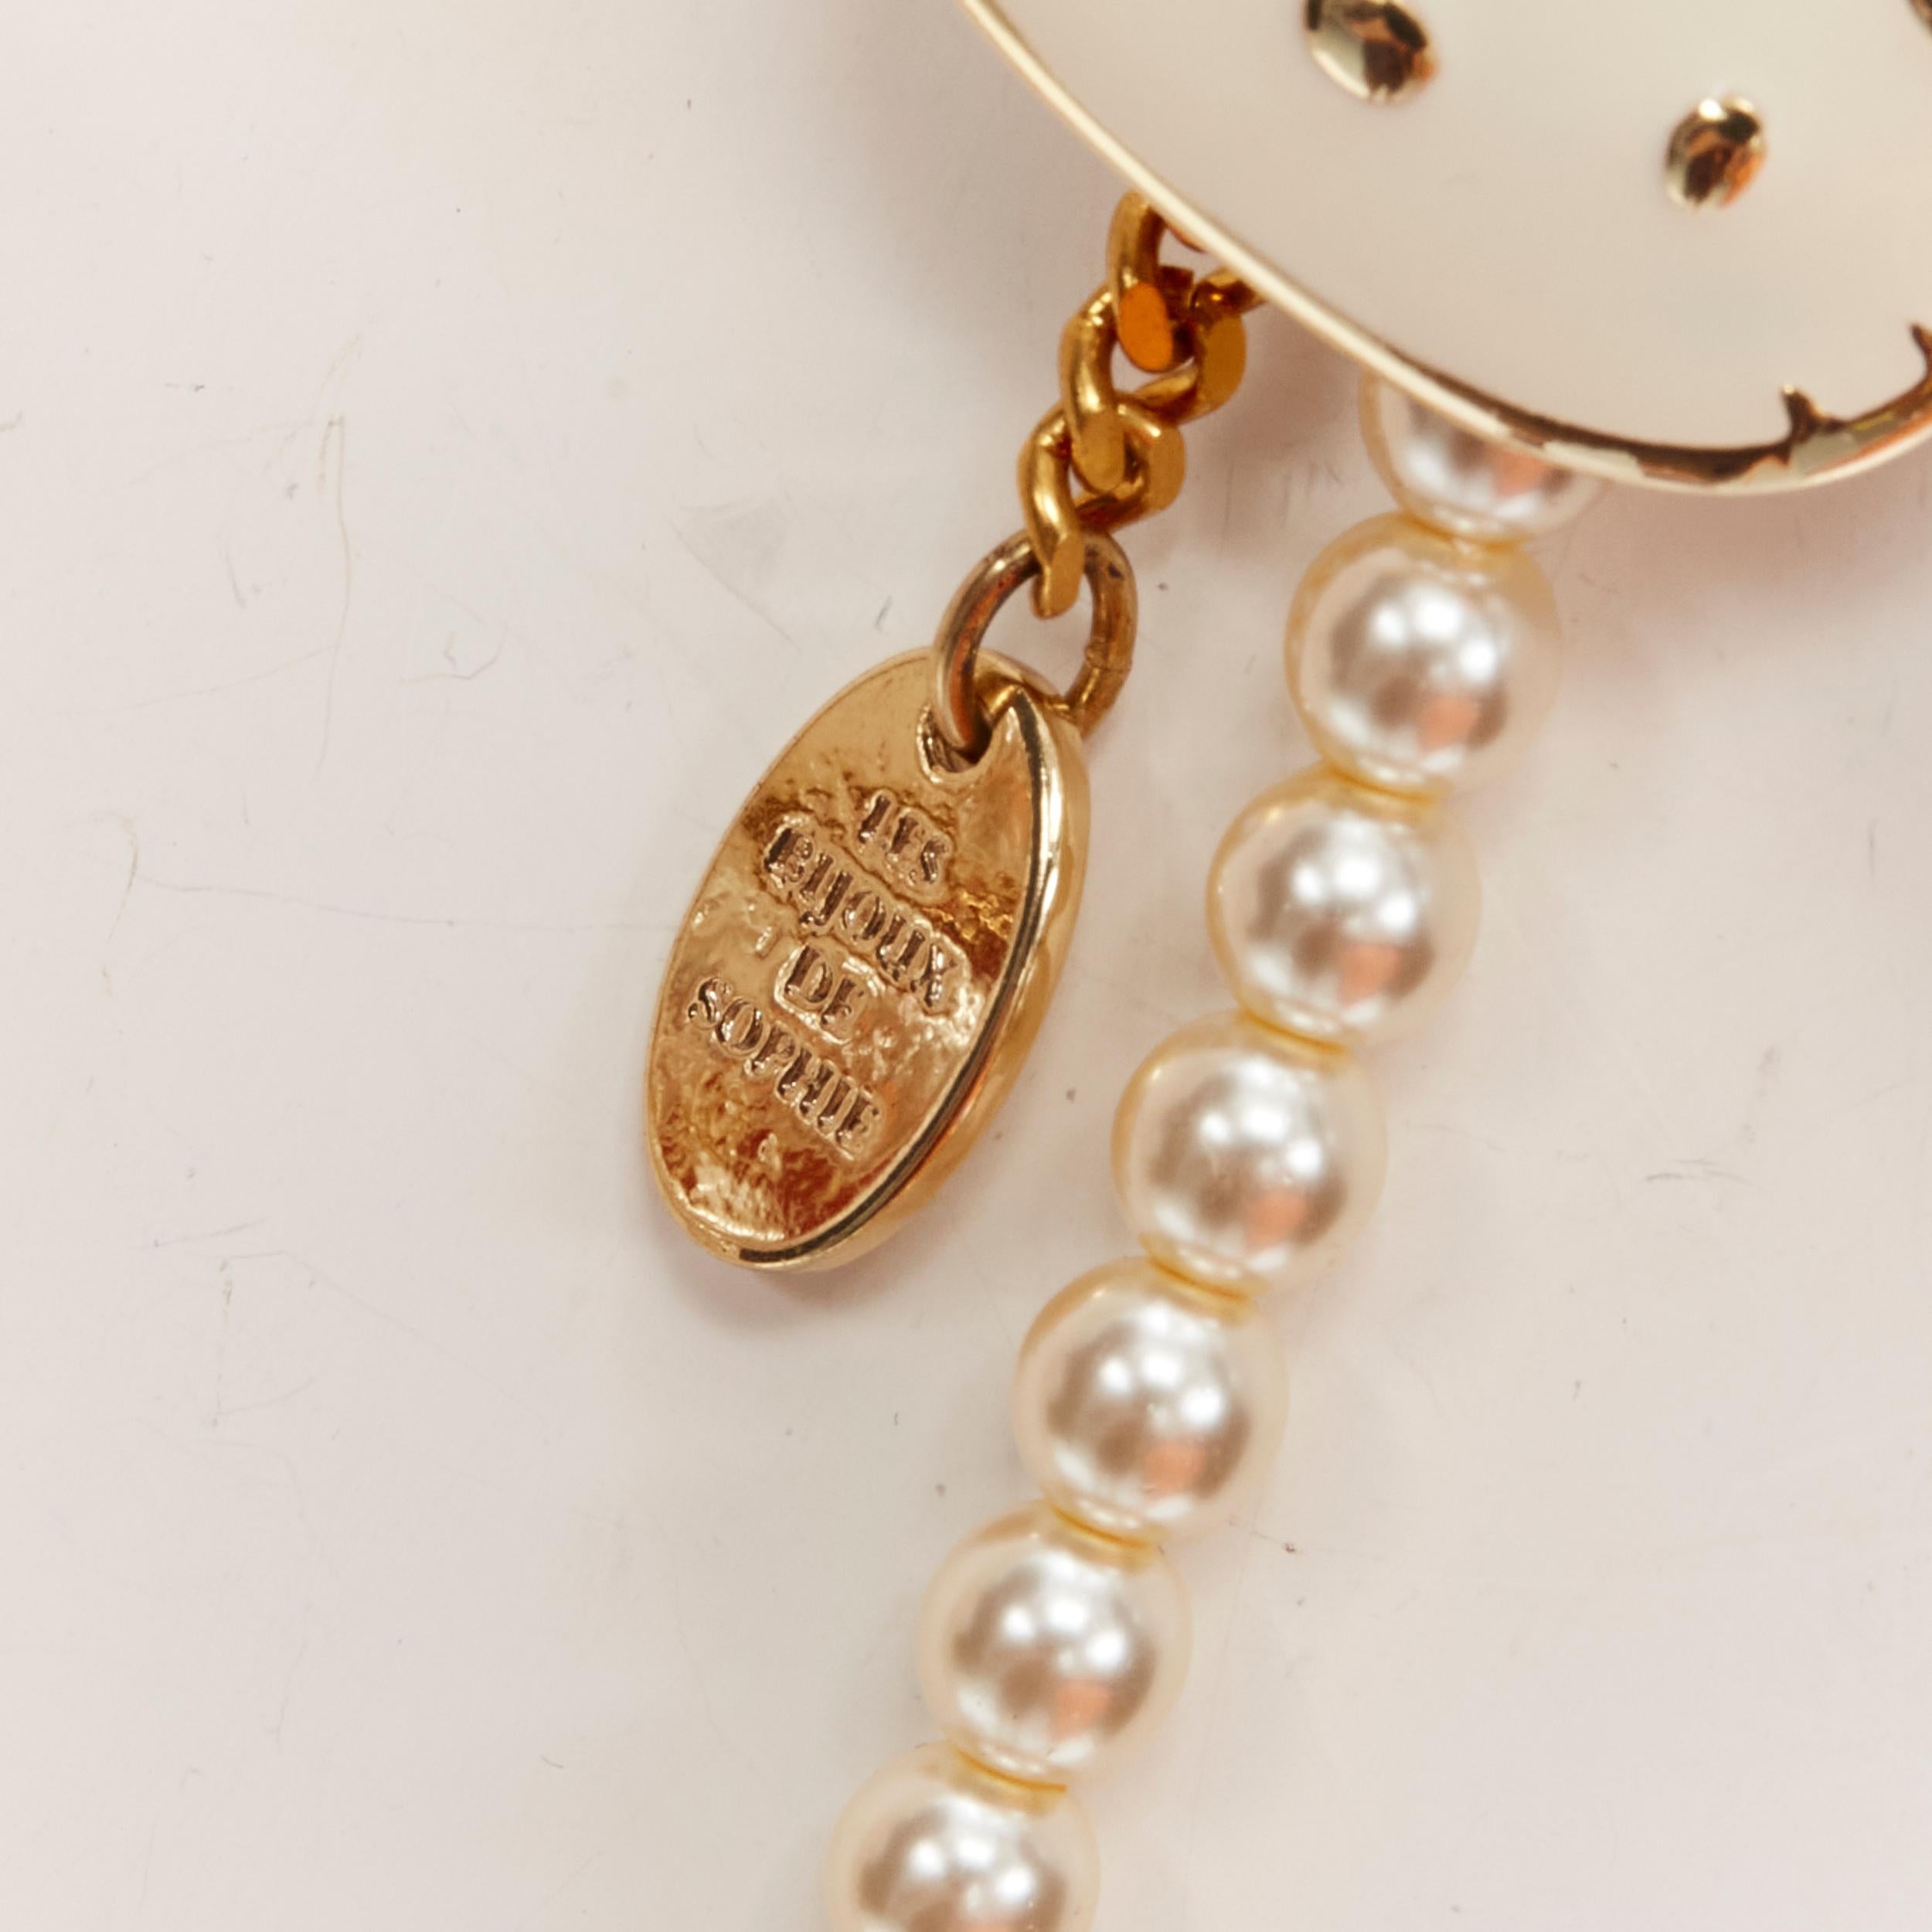 LE BIJOUX DE SOPHIE Hello Kitty pearl cake bow necklace For Sale 4